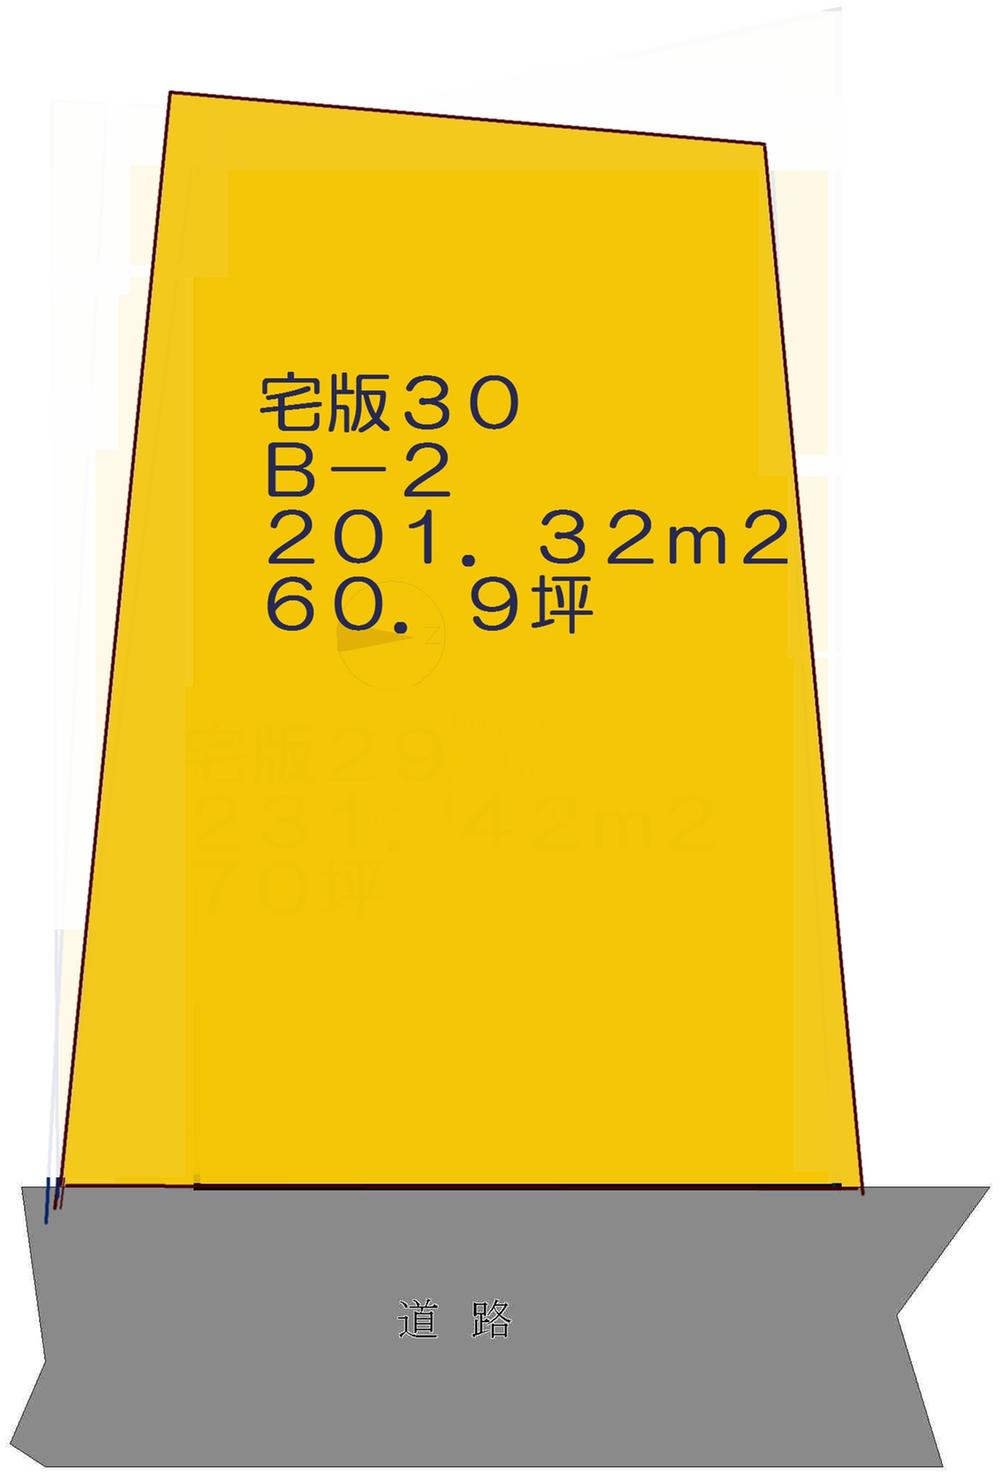 Compartment figure. Land price 4.57 million yen, Land area 201.32 sq m